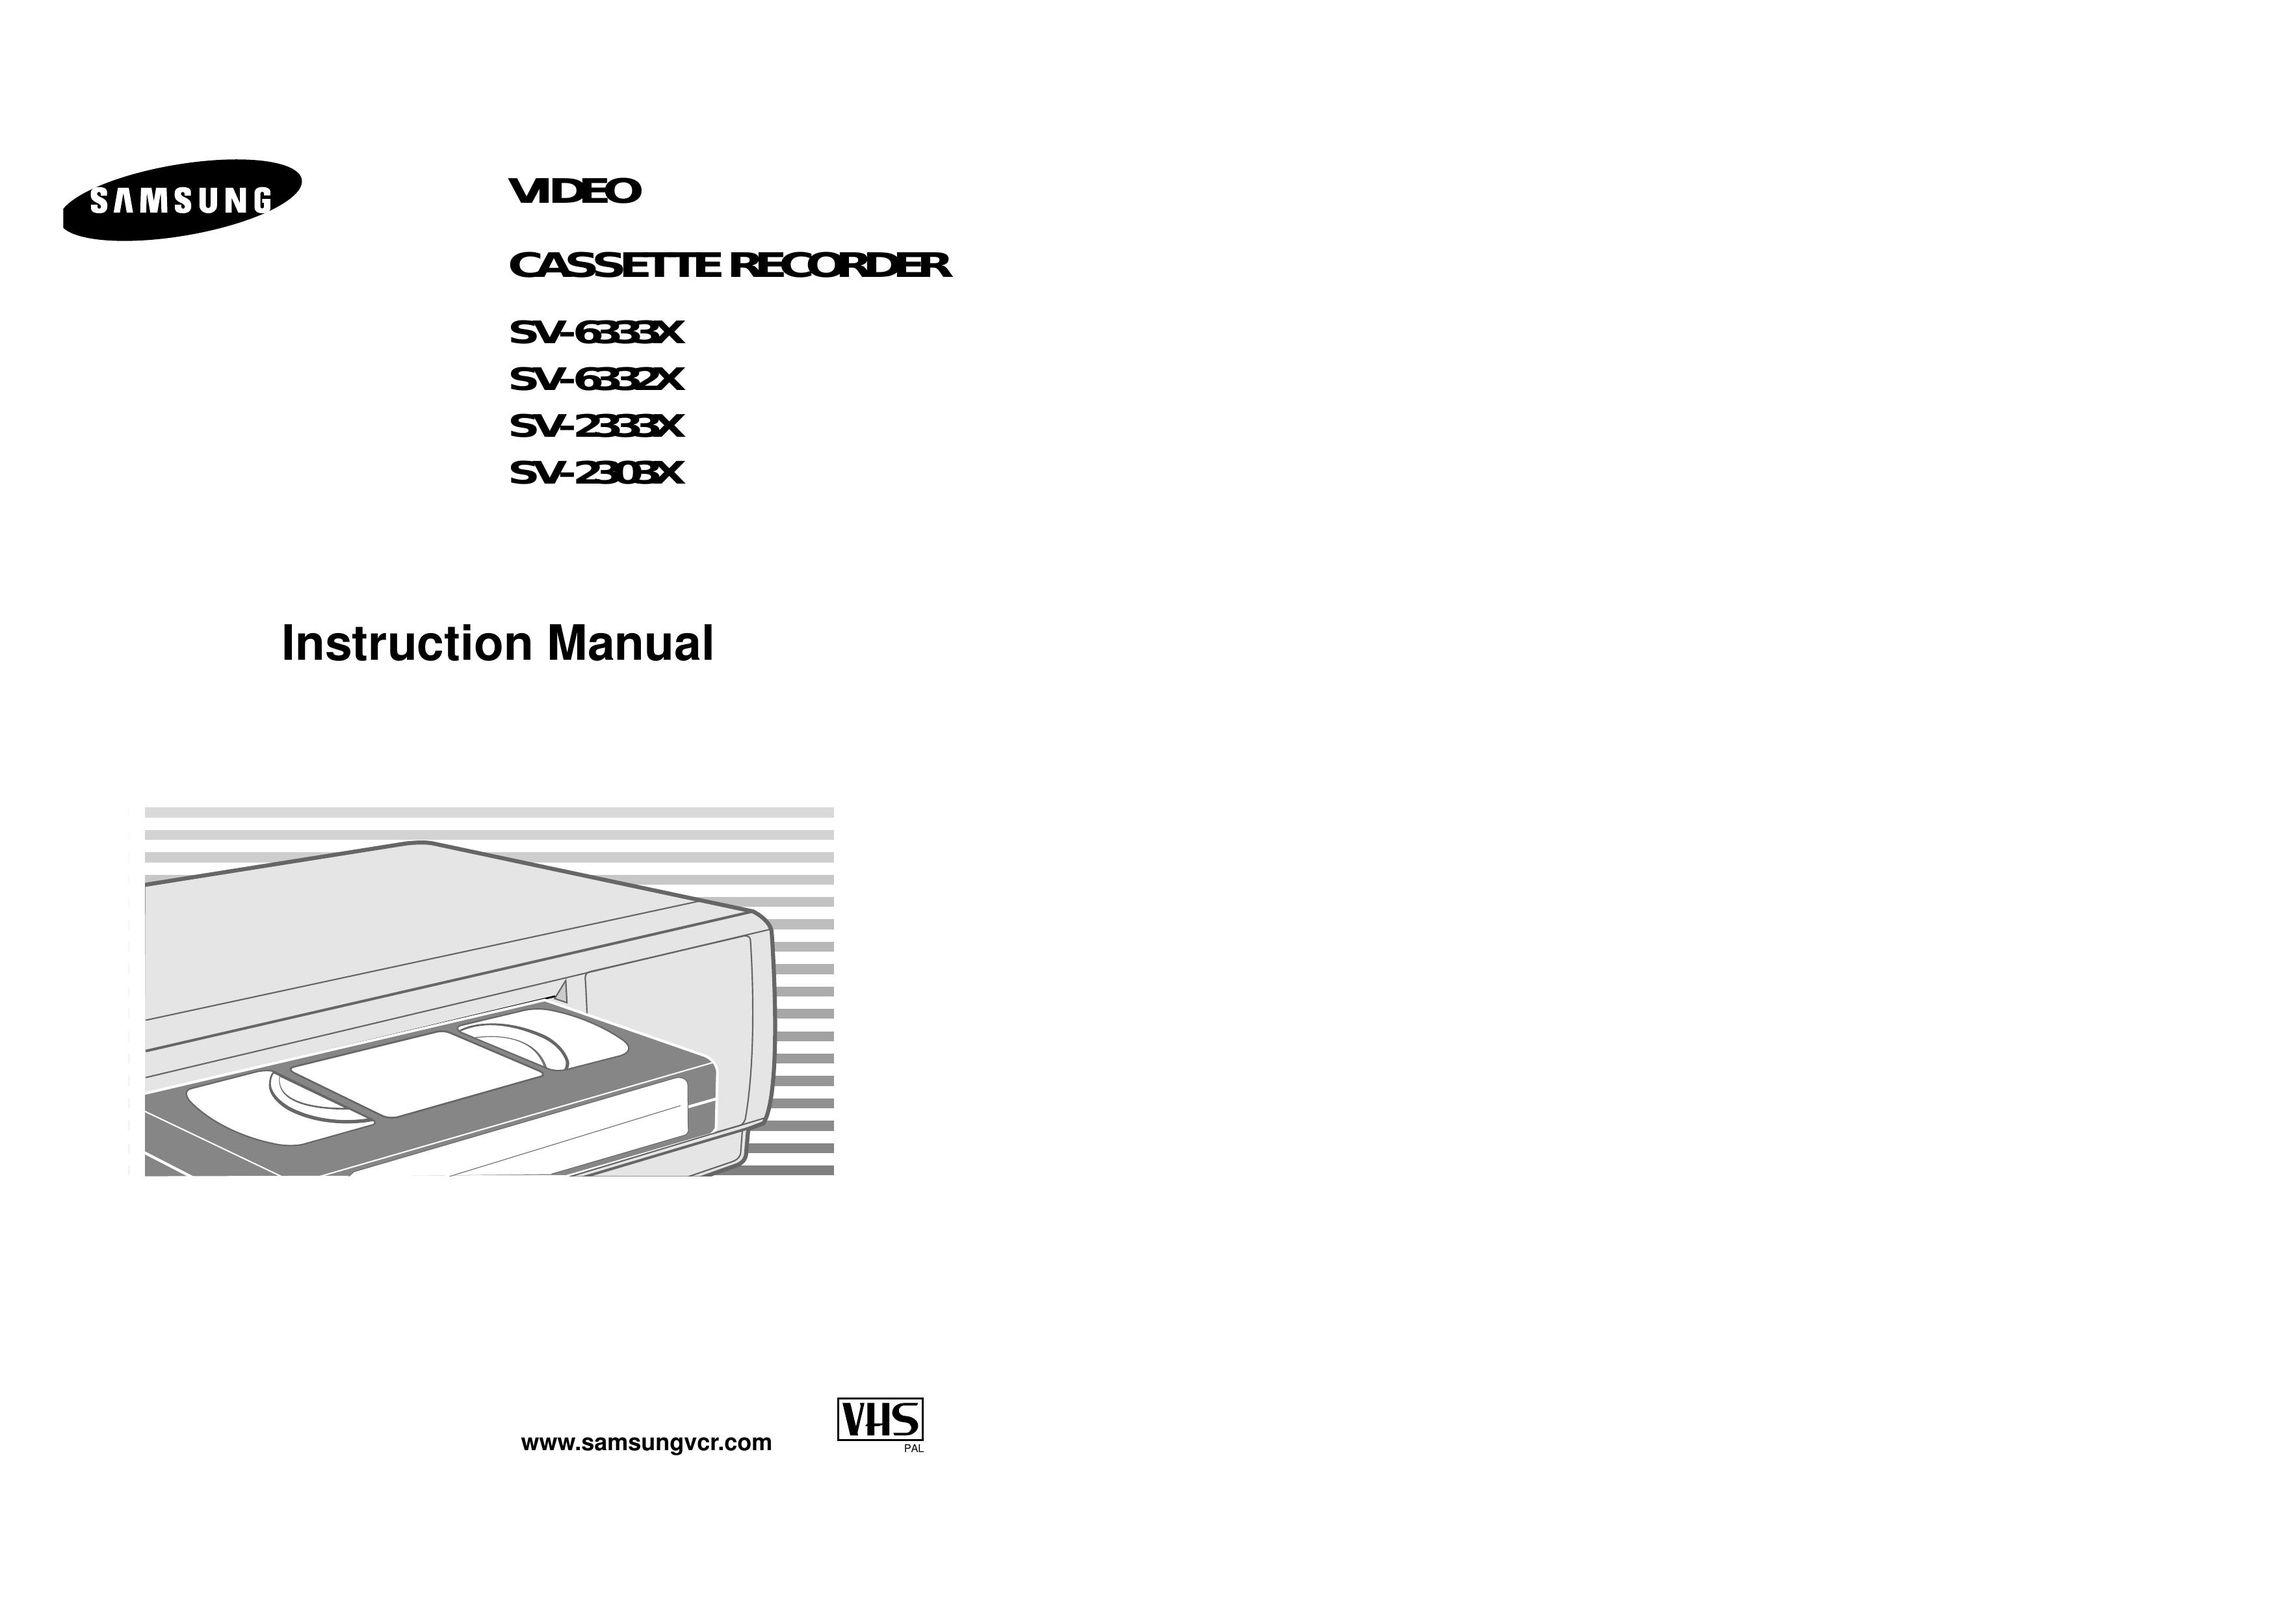 Samsung SV-6333X VCR User Manual